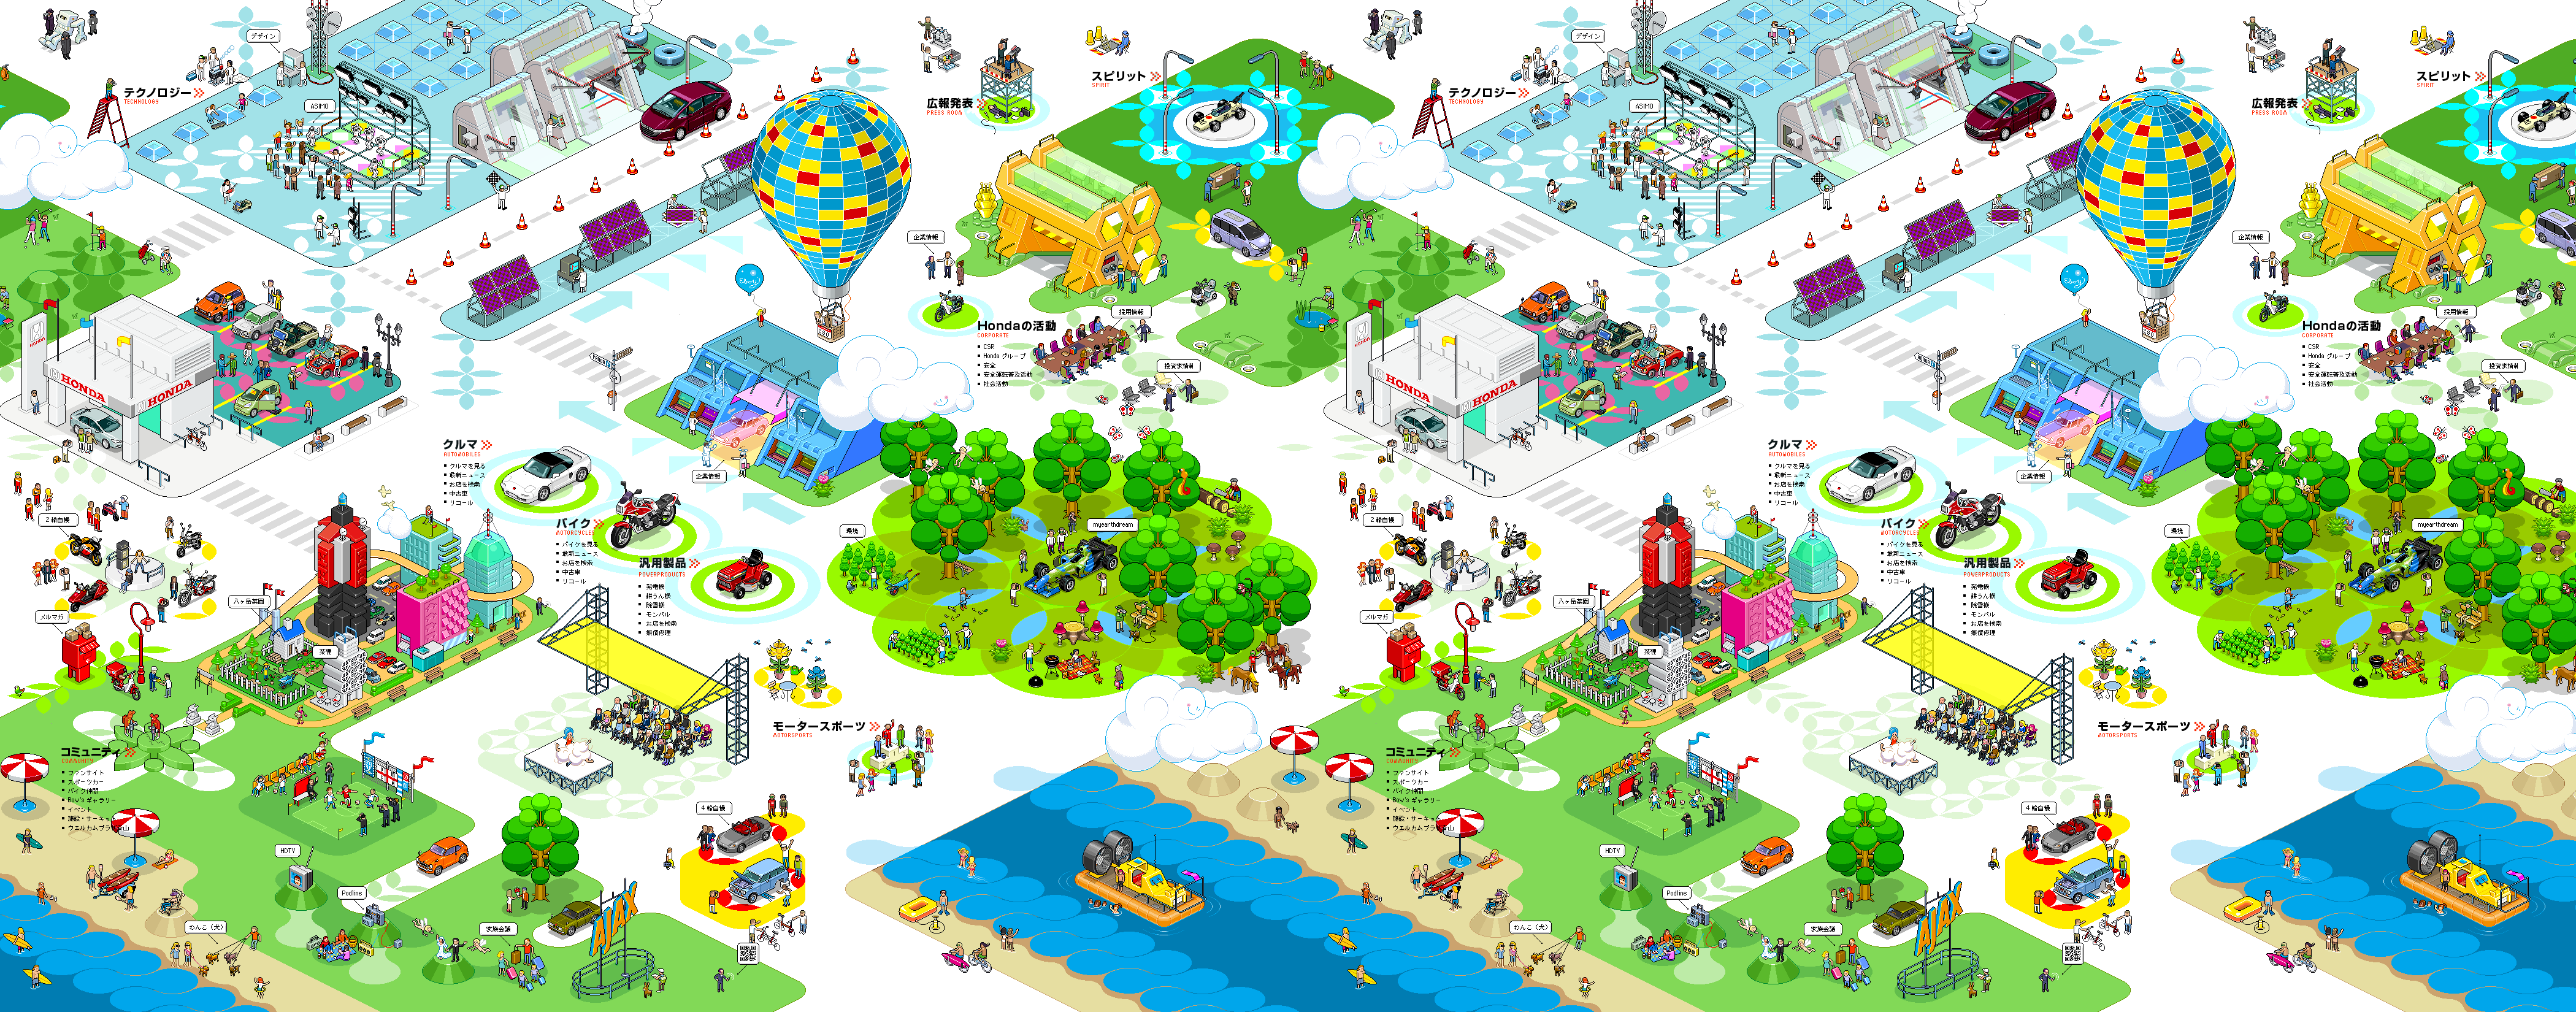 TechCredo eBoy Pixel Art Wallpapers for Android